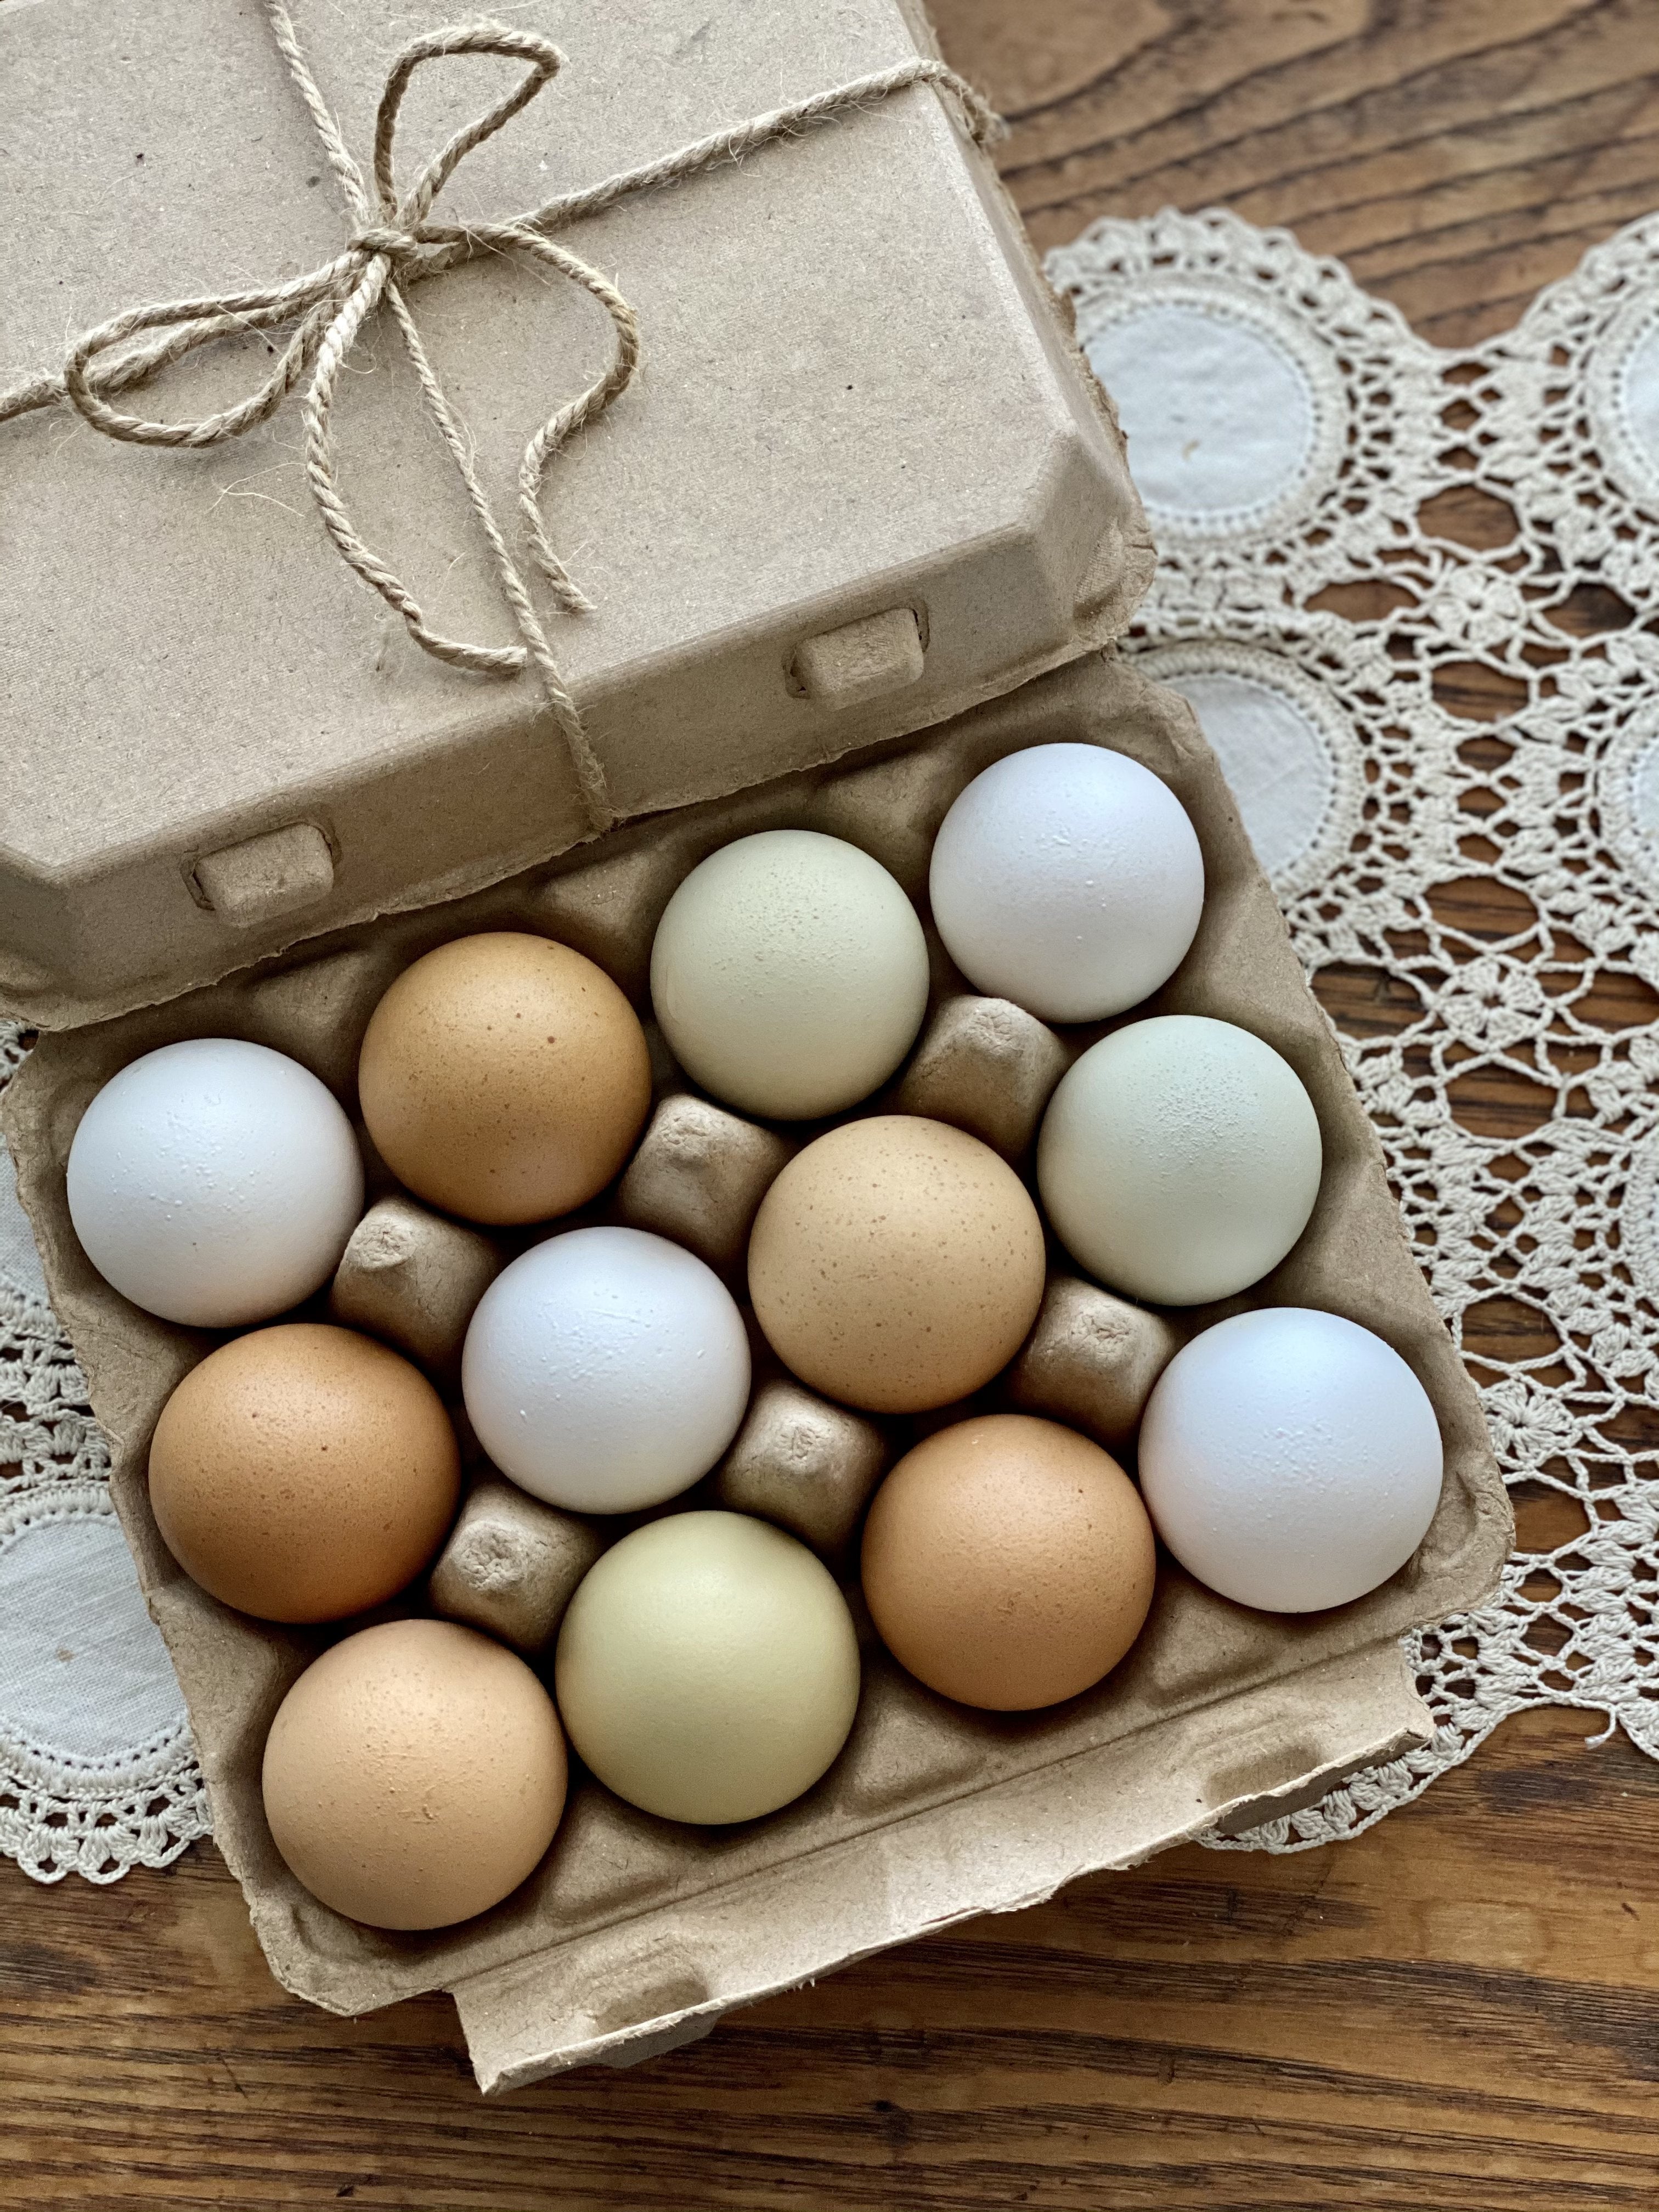 Vintage Chicken Egg Cartons (12 eggs)